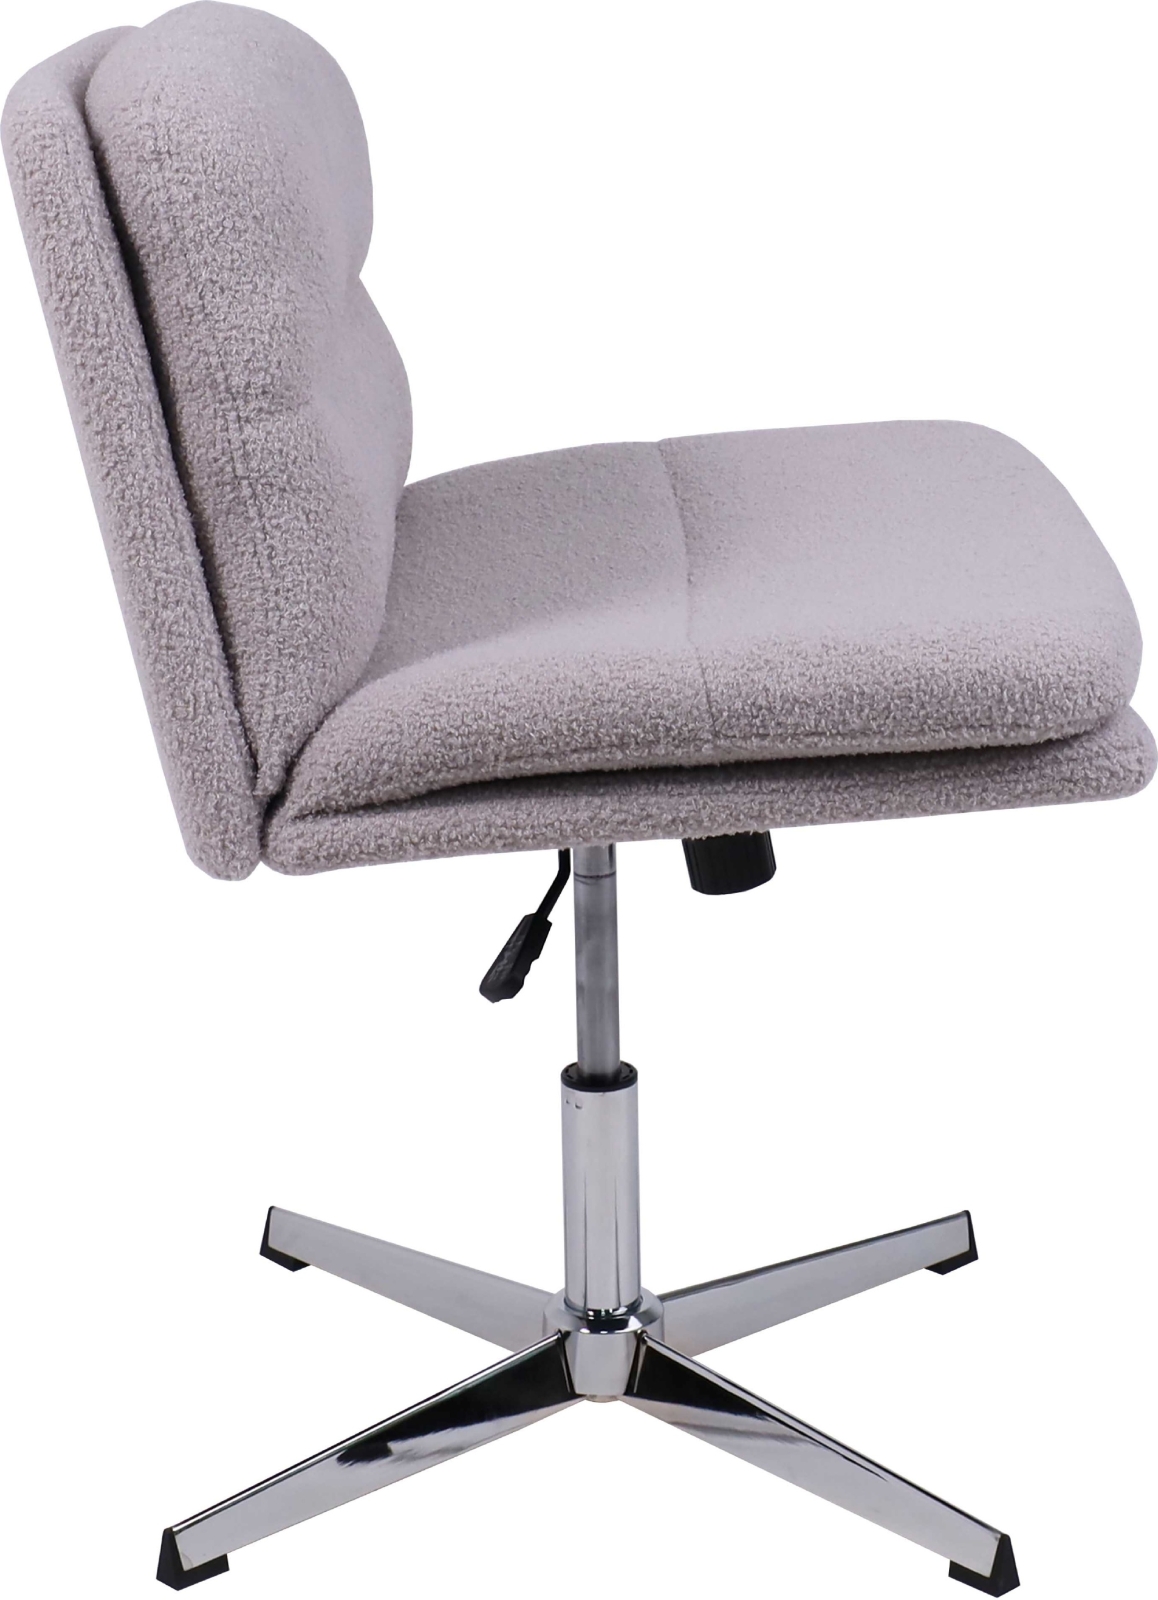 Кресло компьютерное AKSHOME Andre светло-серый букле CM2023-8/хром (105414) - Фото 4